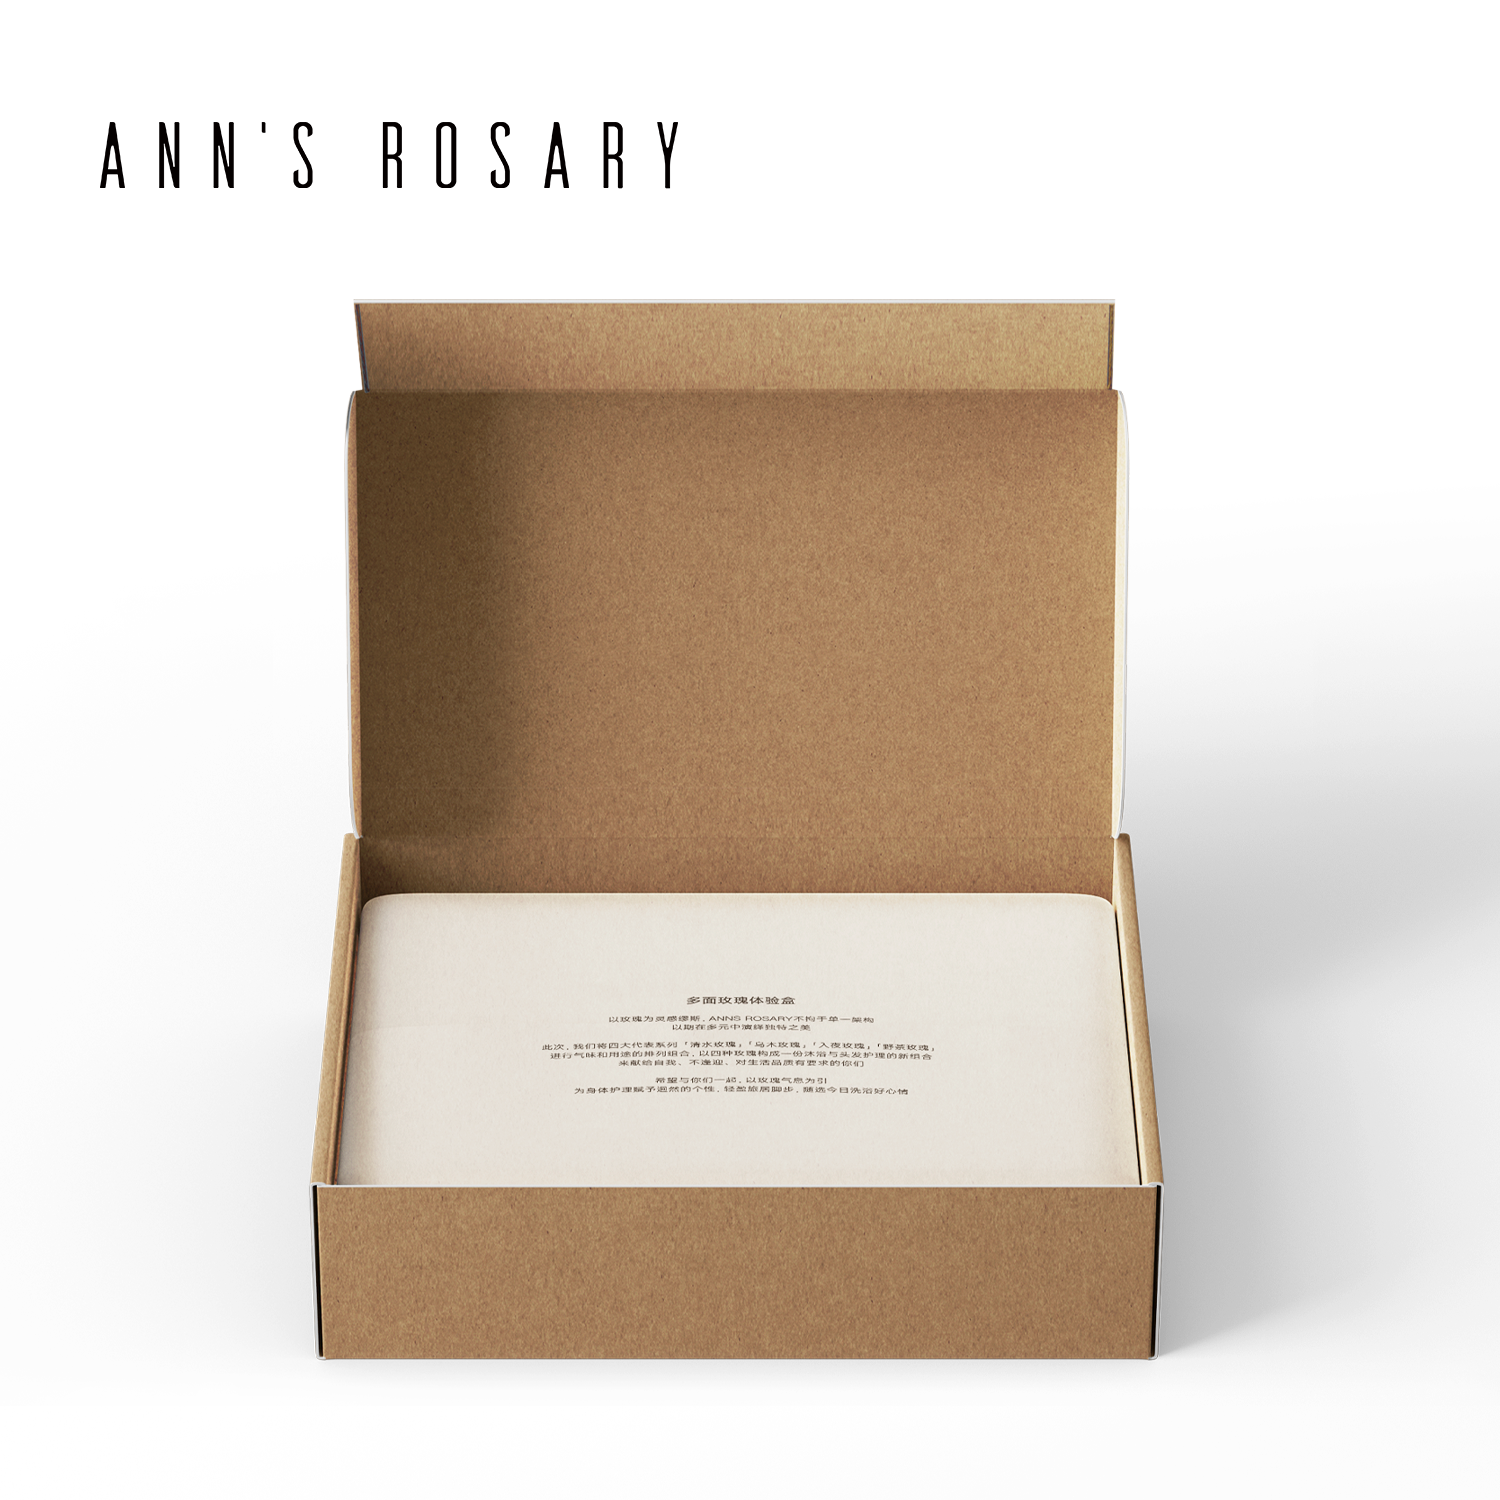 ANNS ROSARY/安的玫瑰庄园多面玫瑰洗护限定礼盒清洁滋润-图3